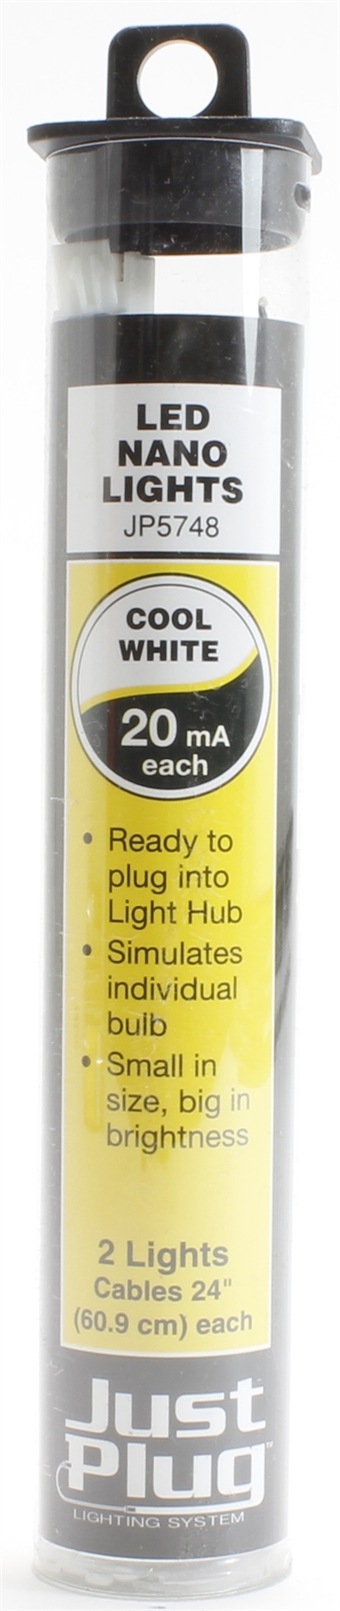 Cool white LED nano lights for Just Plug lighting system